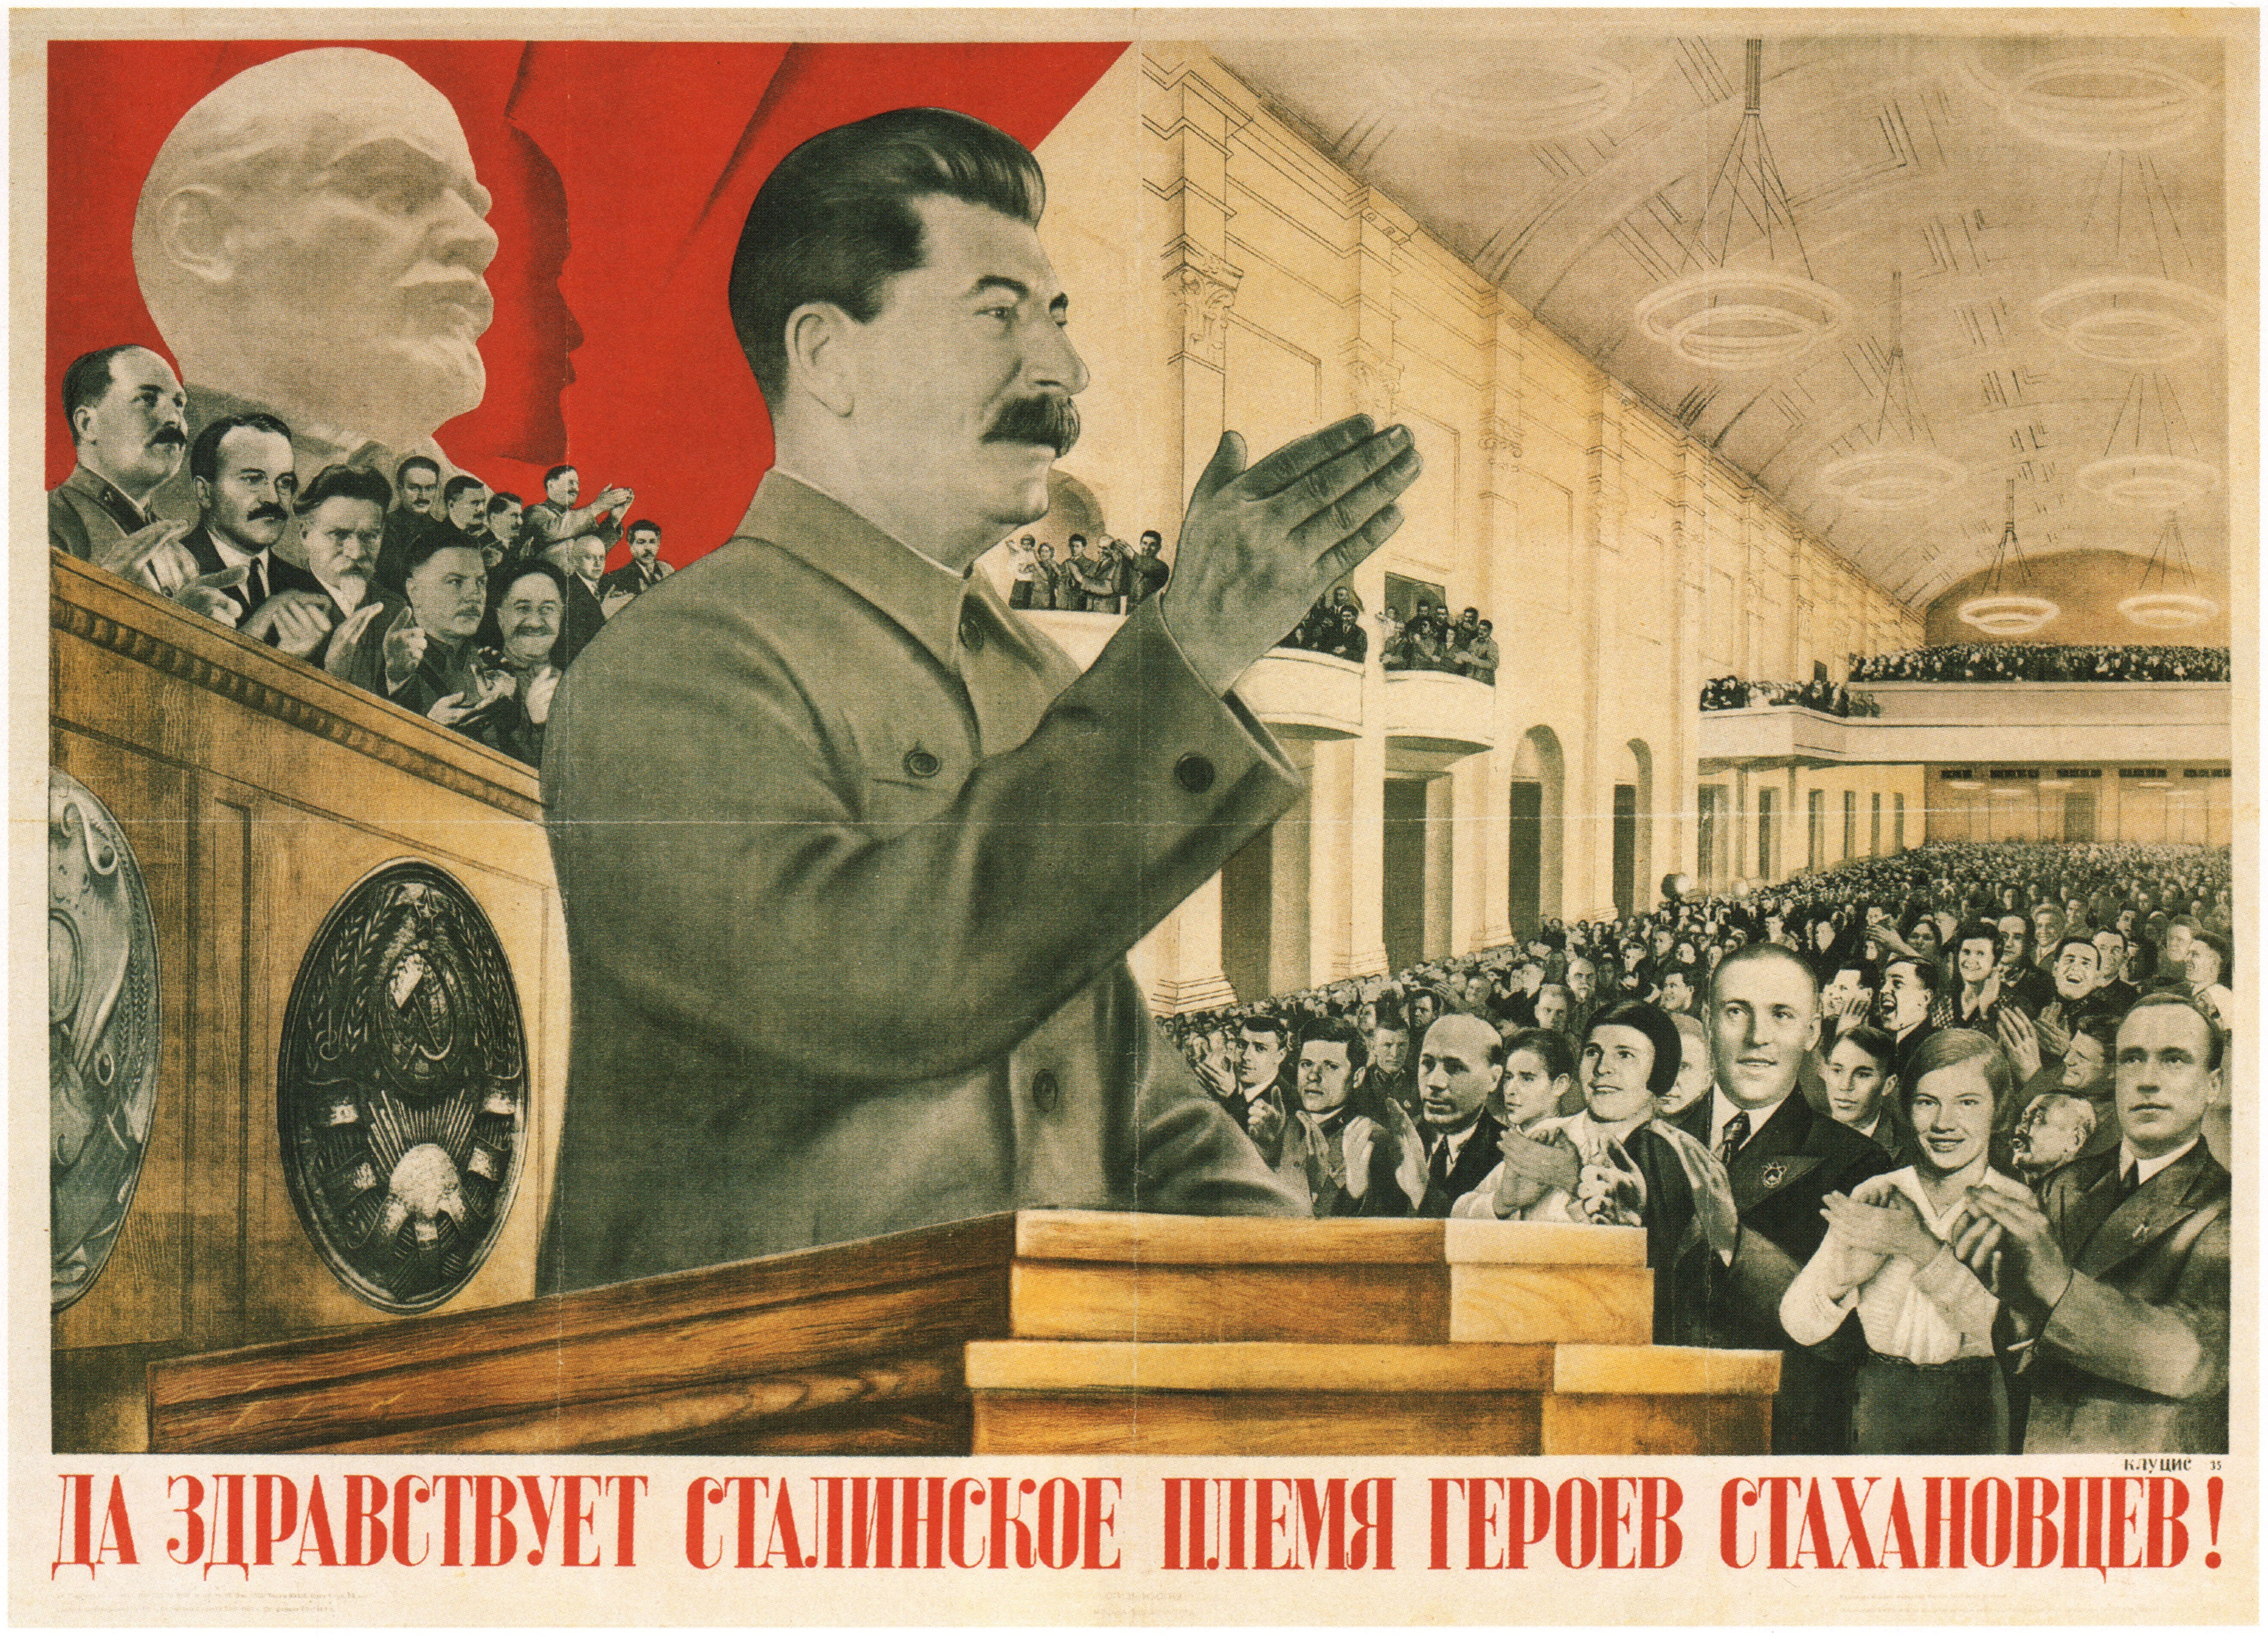 ‘Long live Stalin’s generation of Stakhanov Heroes!’ A propaganda poster by Gustav Klutsis